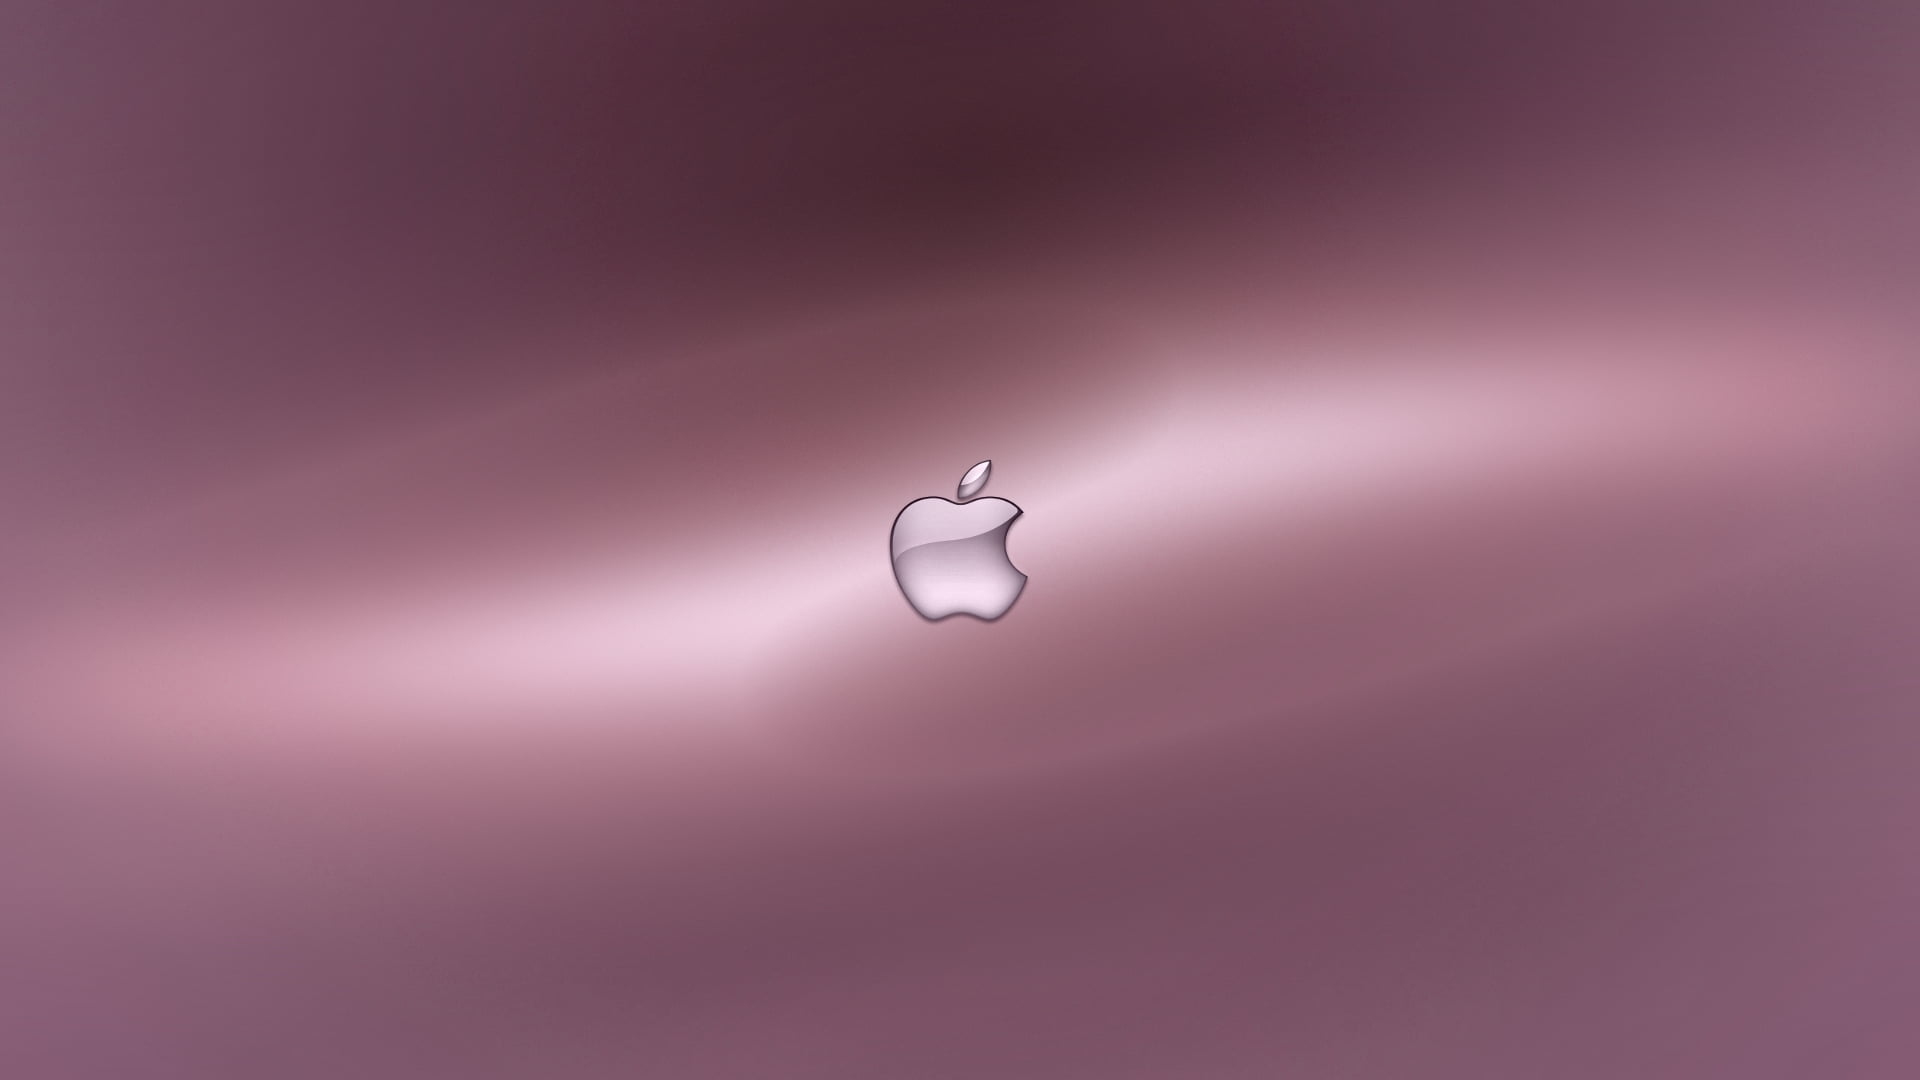 Apple logo, background, pink, no people, love, studio shot, emotion